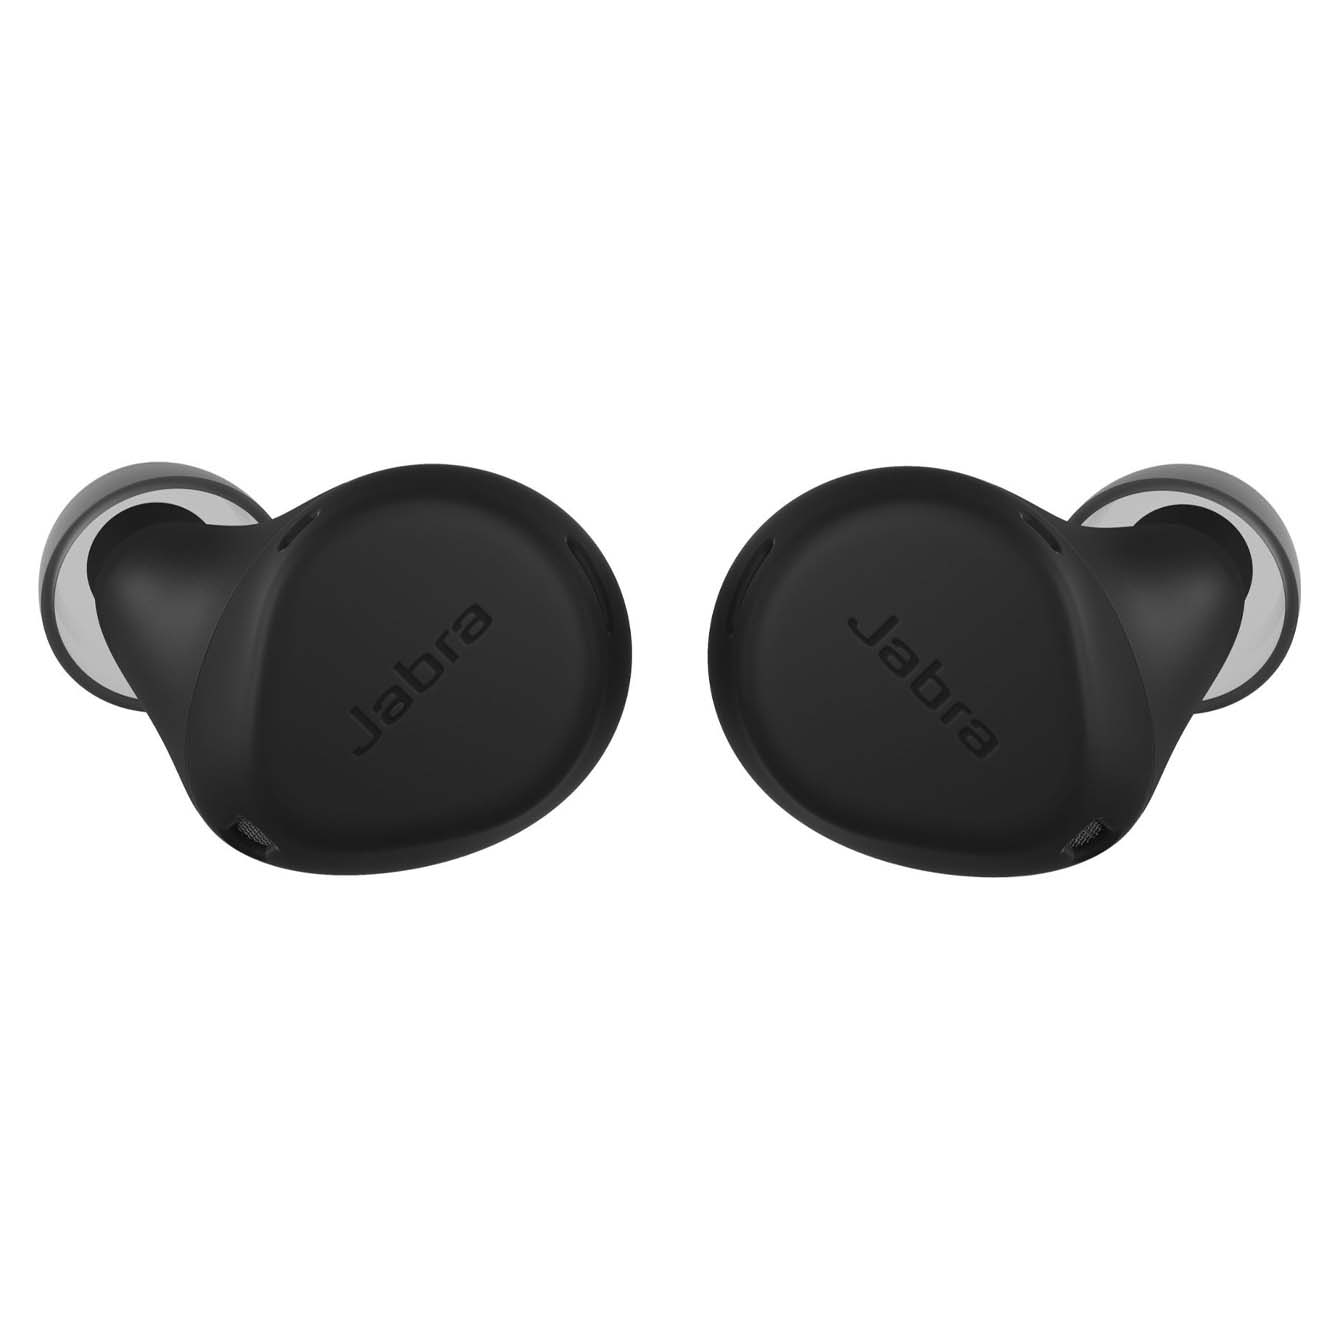 Jabra Elite 7 wireless noise cancelling headphones in black 